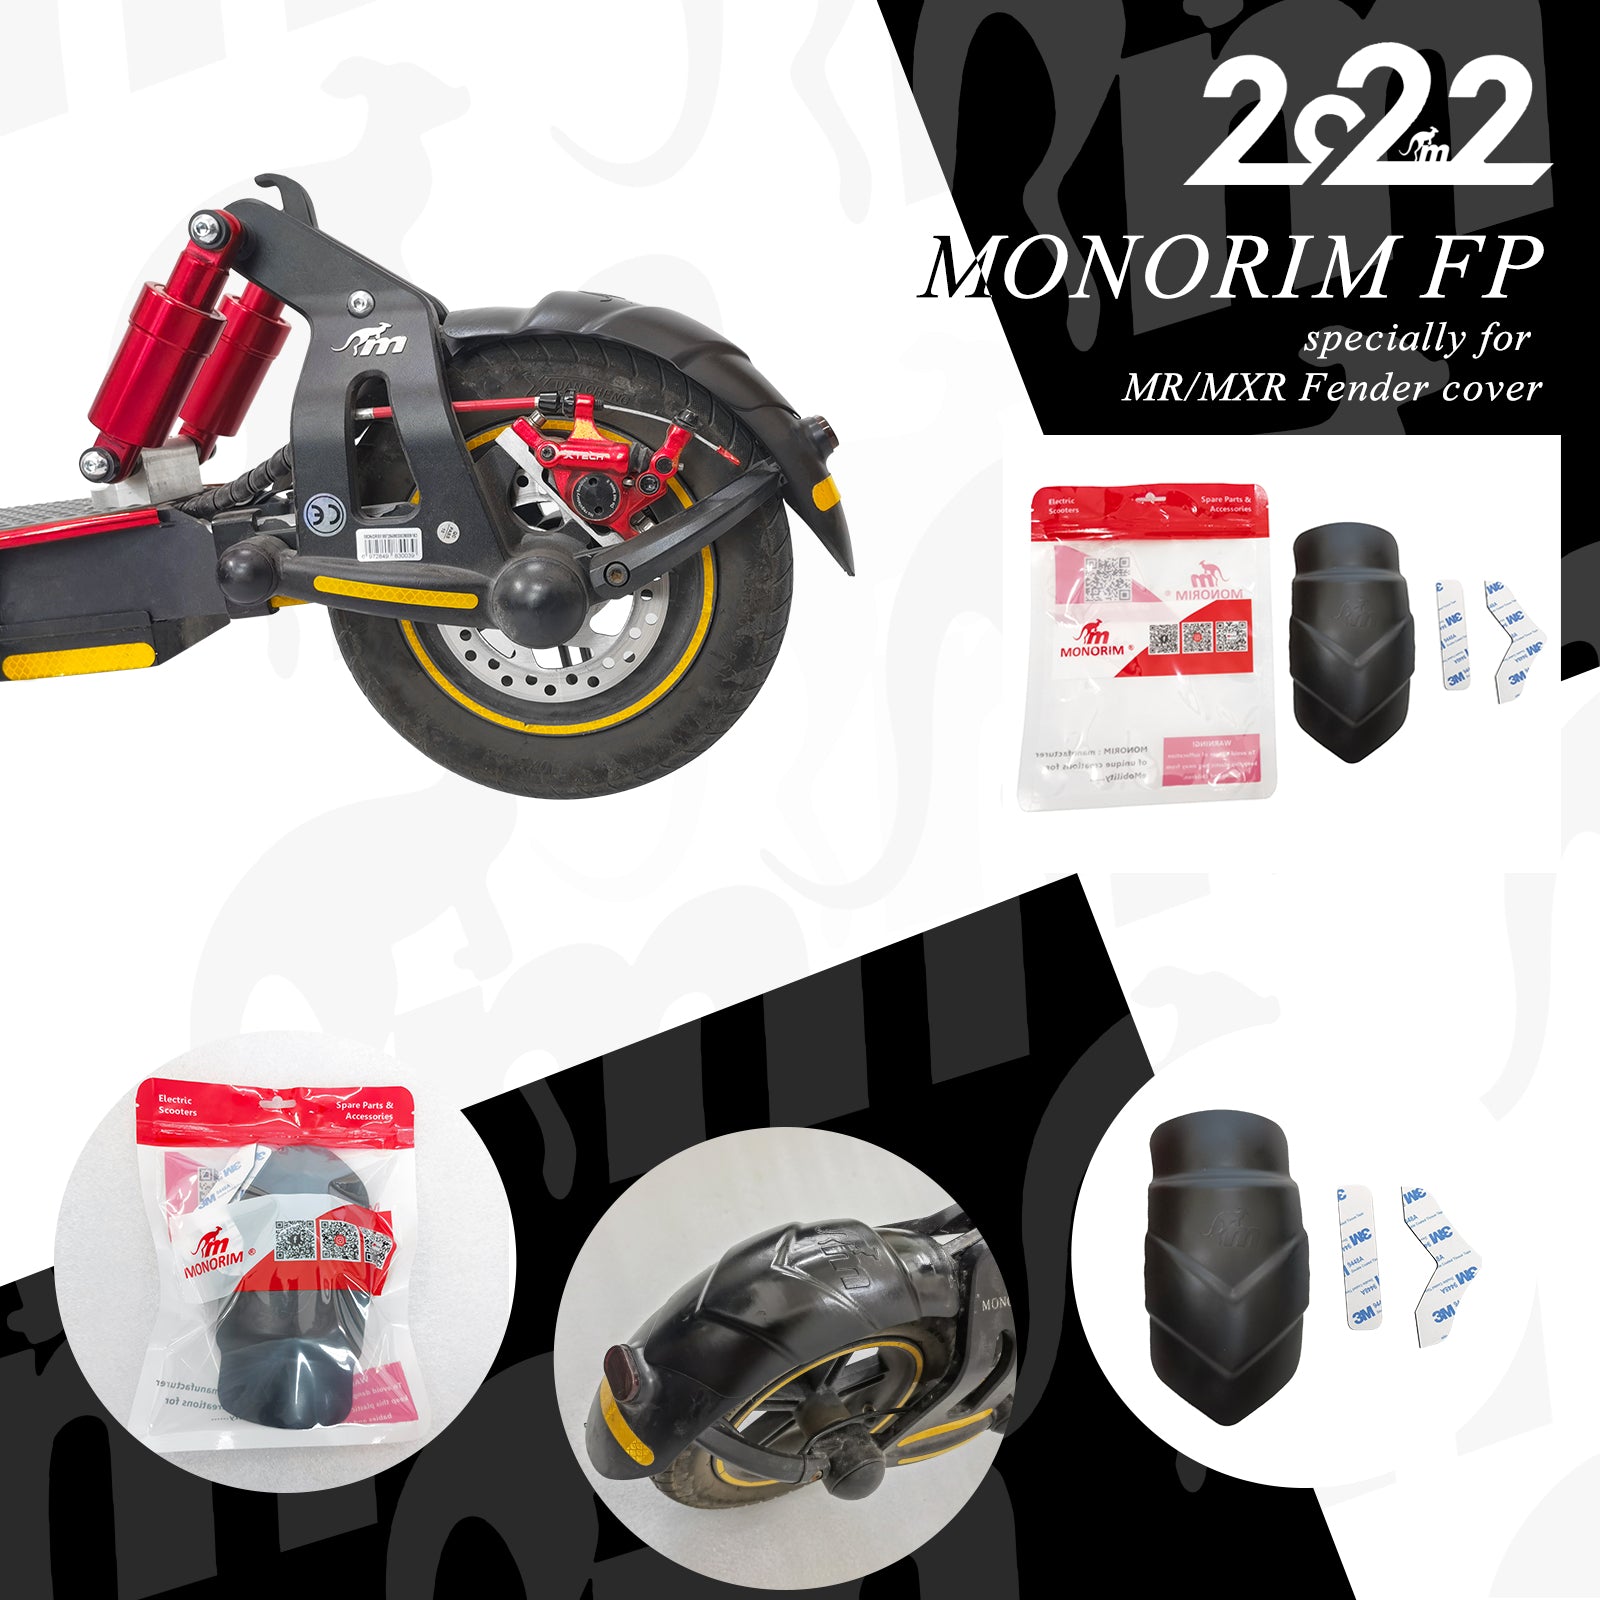 Genuine Monorim fender cover specially for MR/MXR Xiaomi or G30 Ninebot